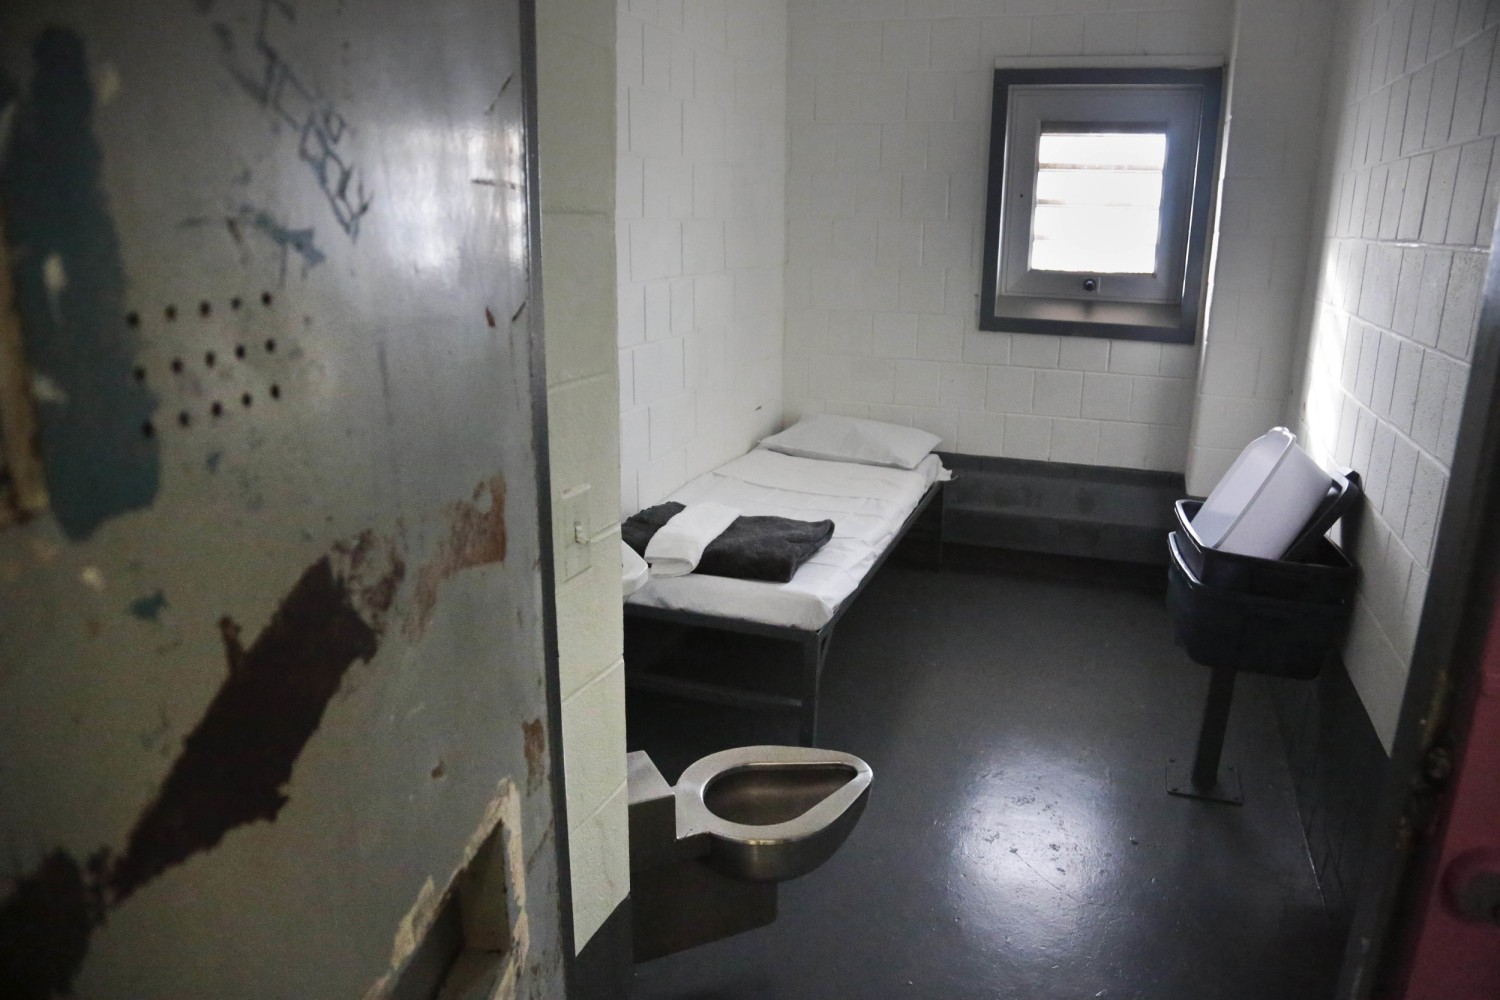 New York's notorious Rikers Island jail moves slowly toward closing